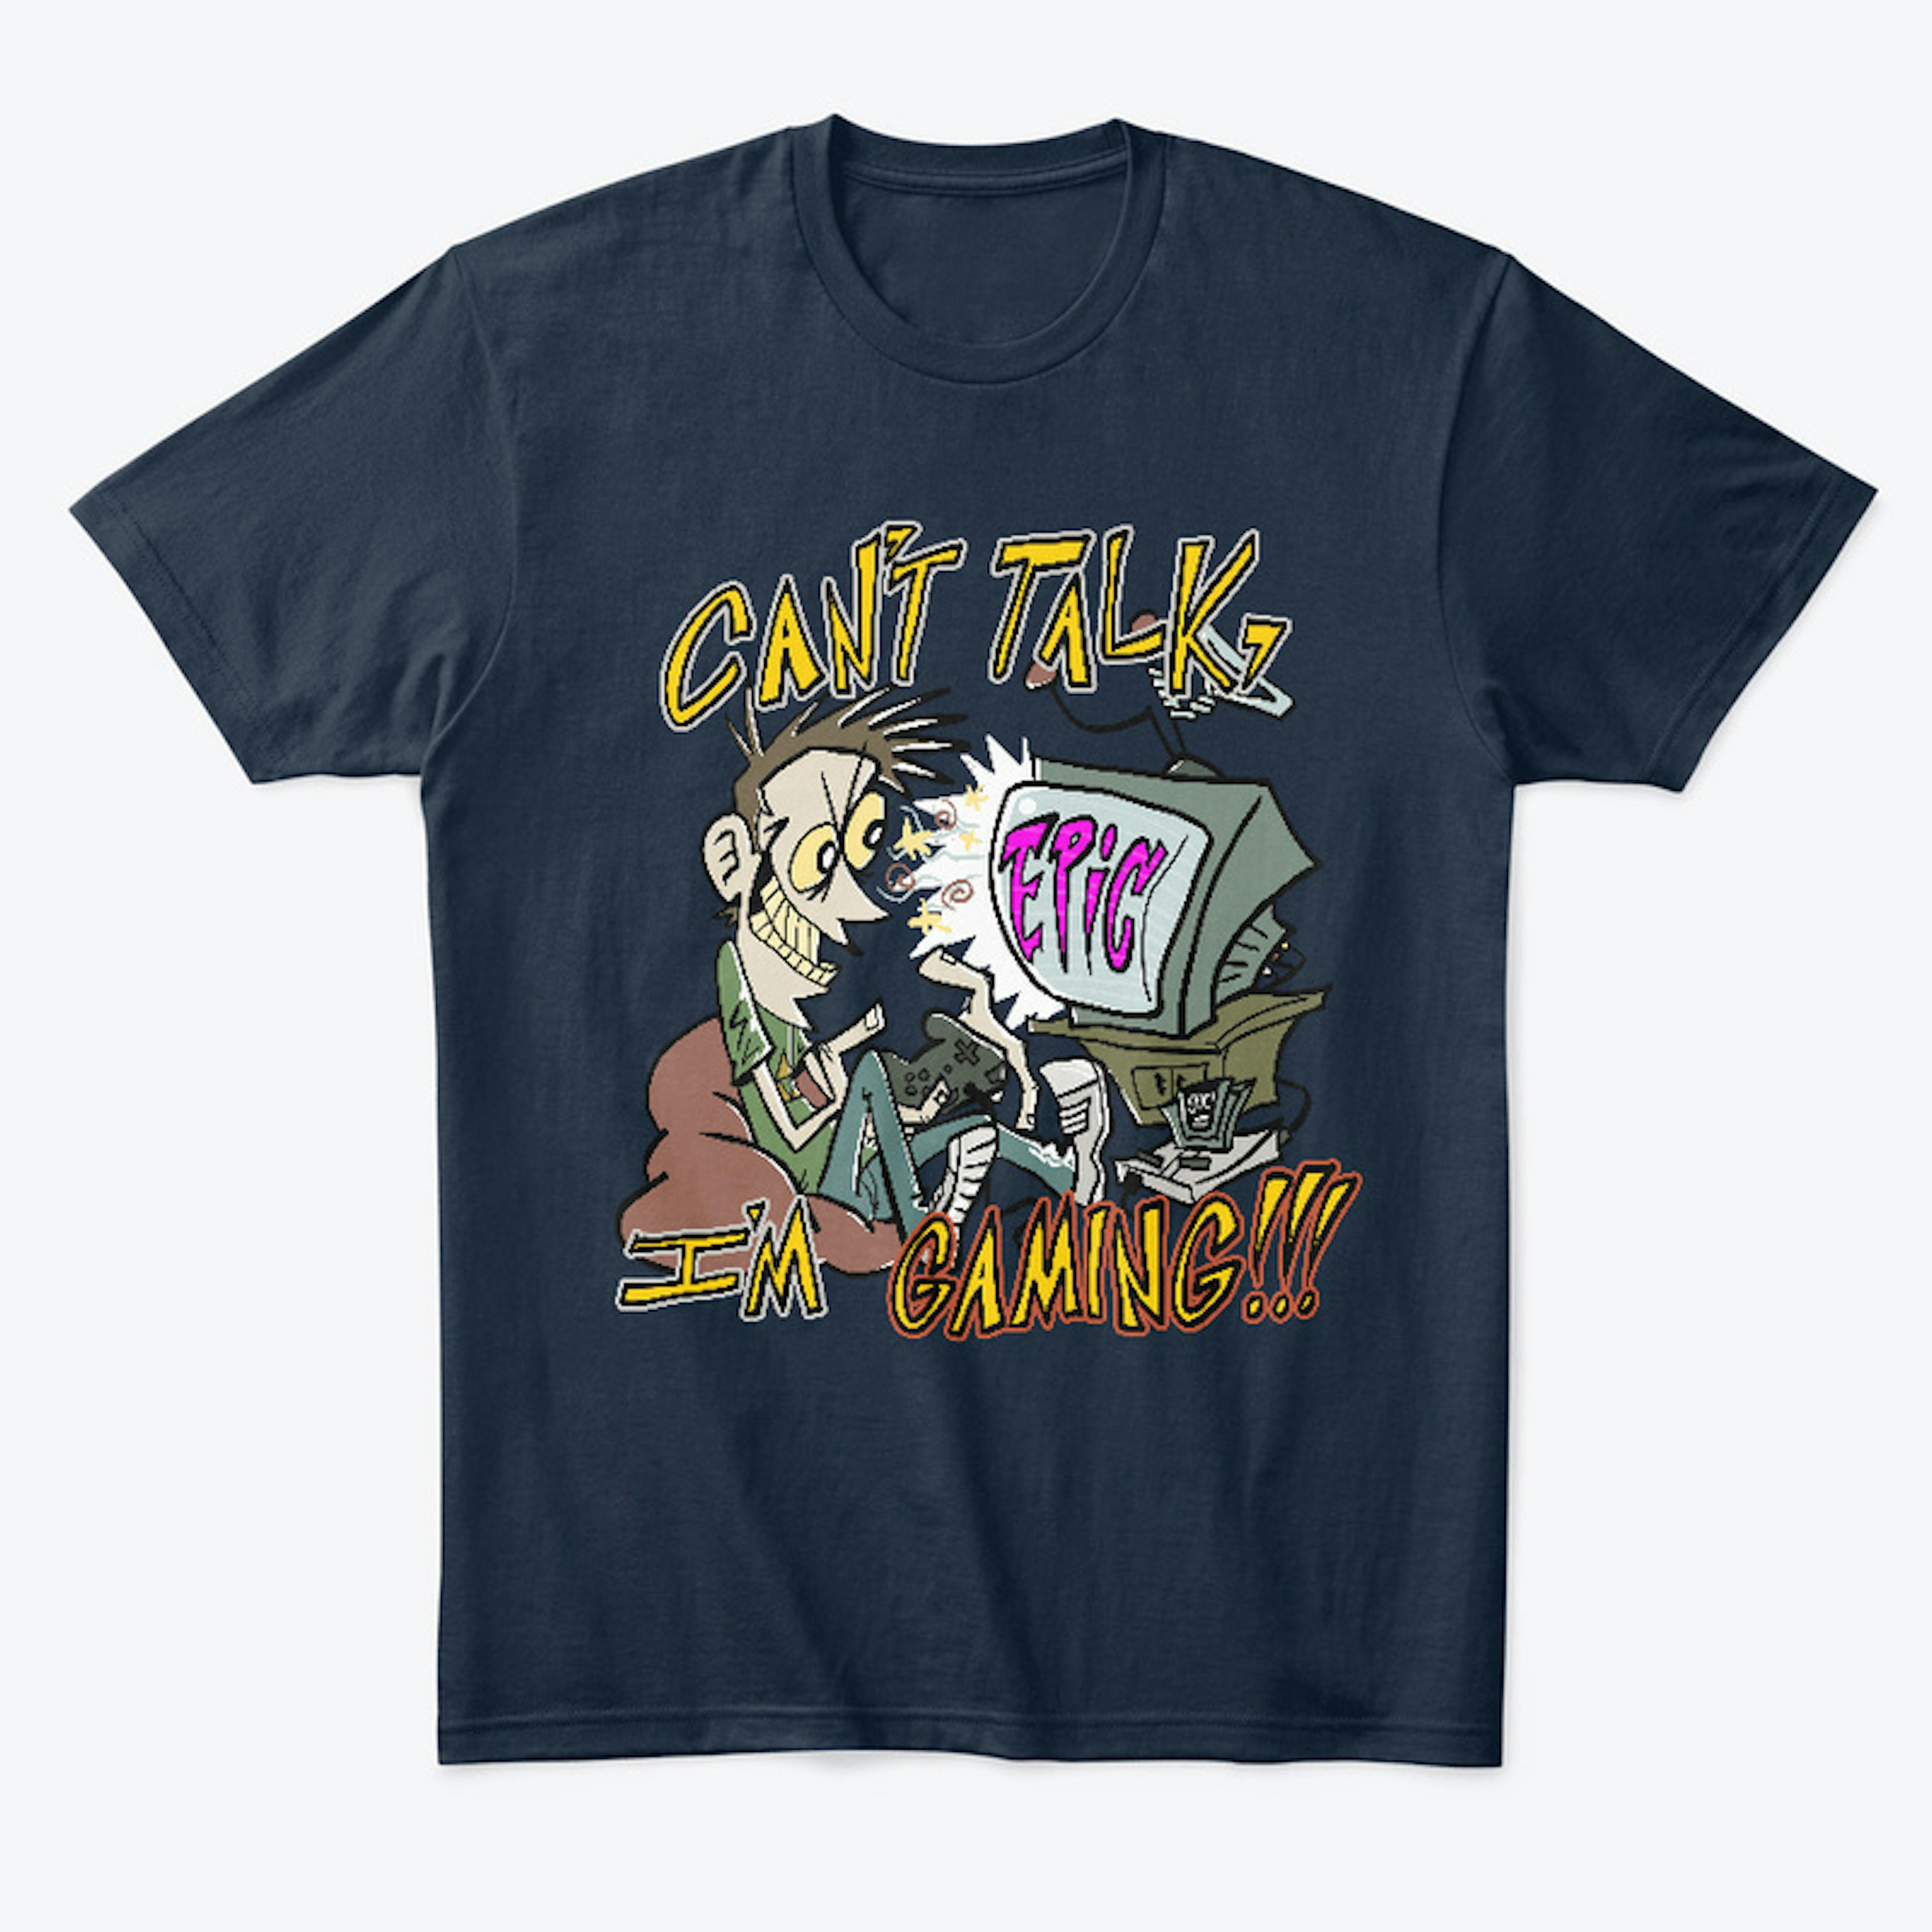 CANT TALK, IM GAMING Shirt